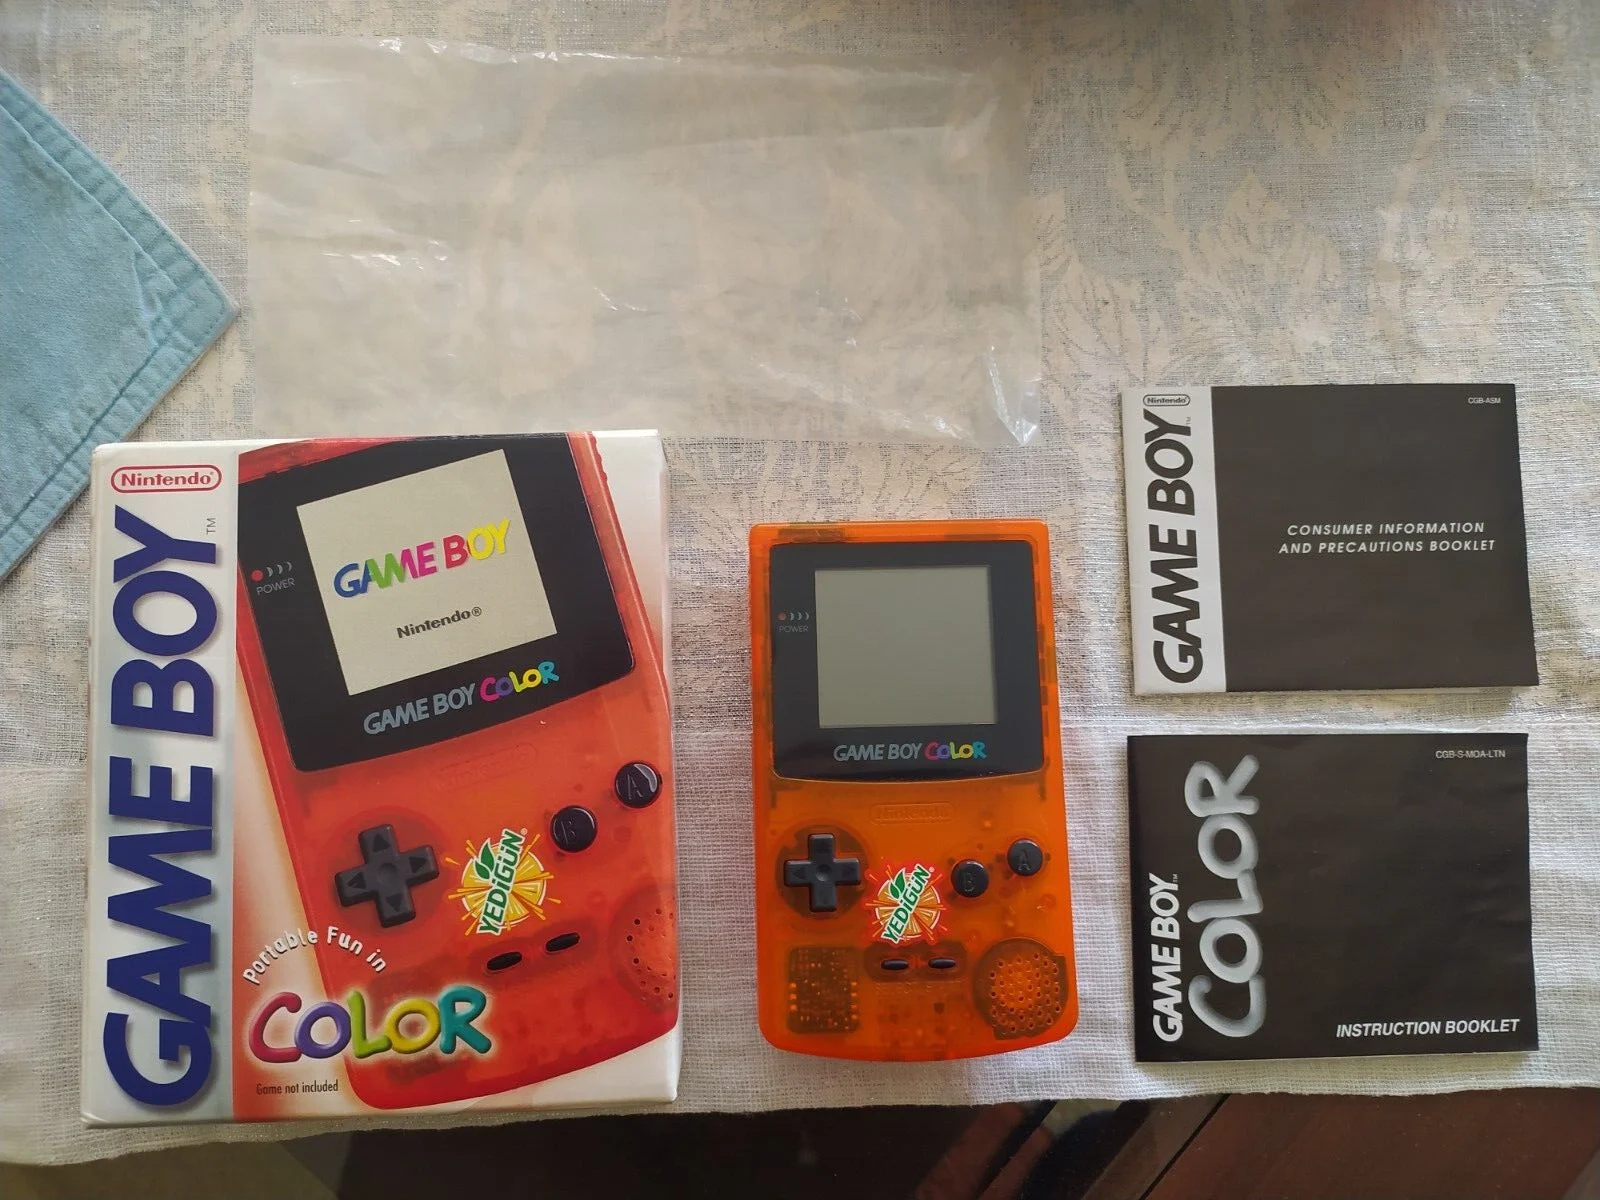  Nintendo Game Boy Color Yedigun Console